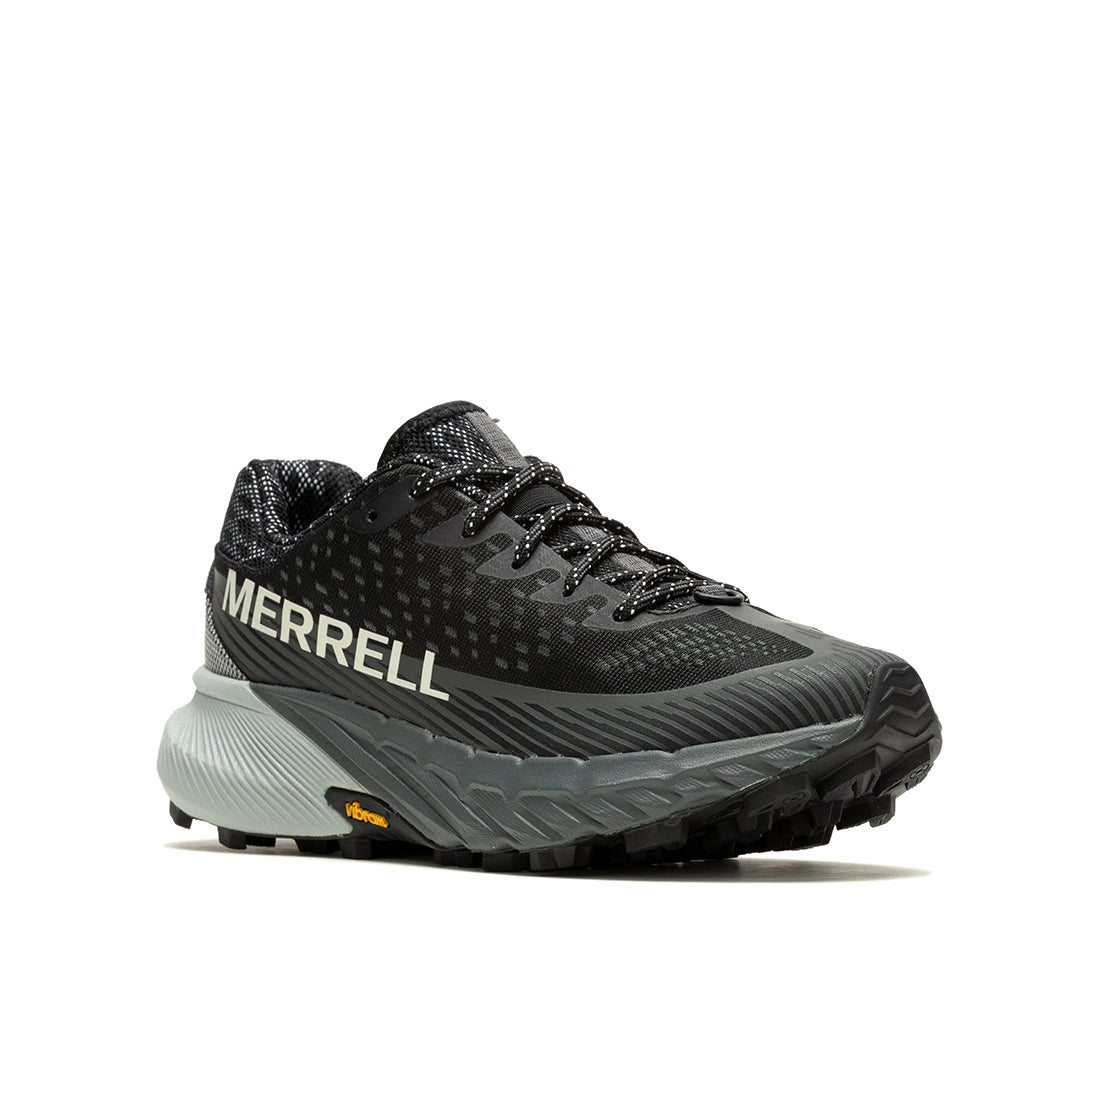 Agility Peak 5-Black/Granite Womens Trail Running Shoes - 0